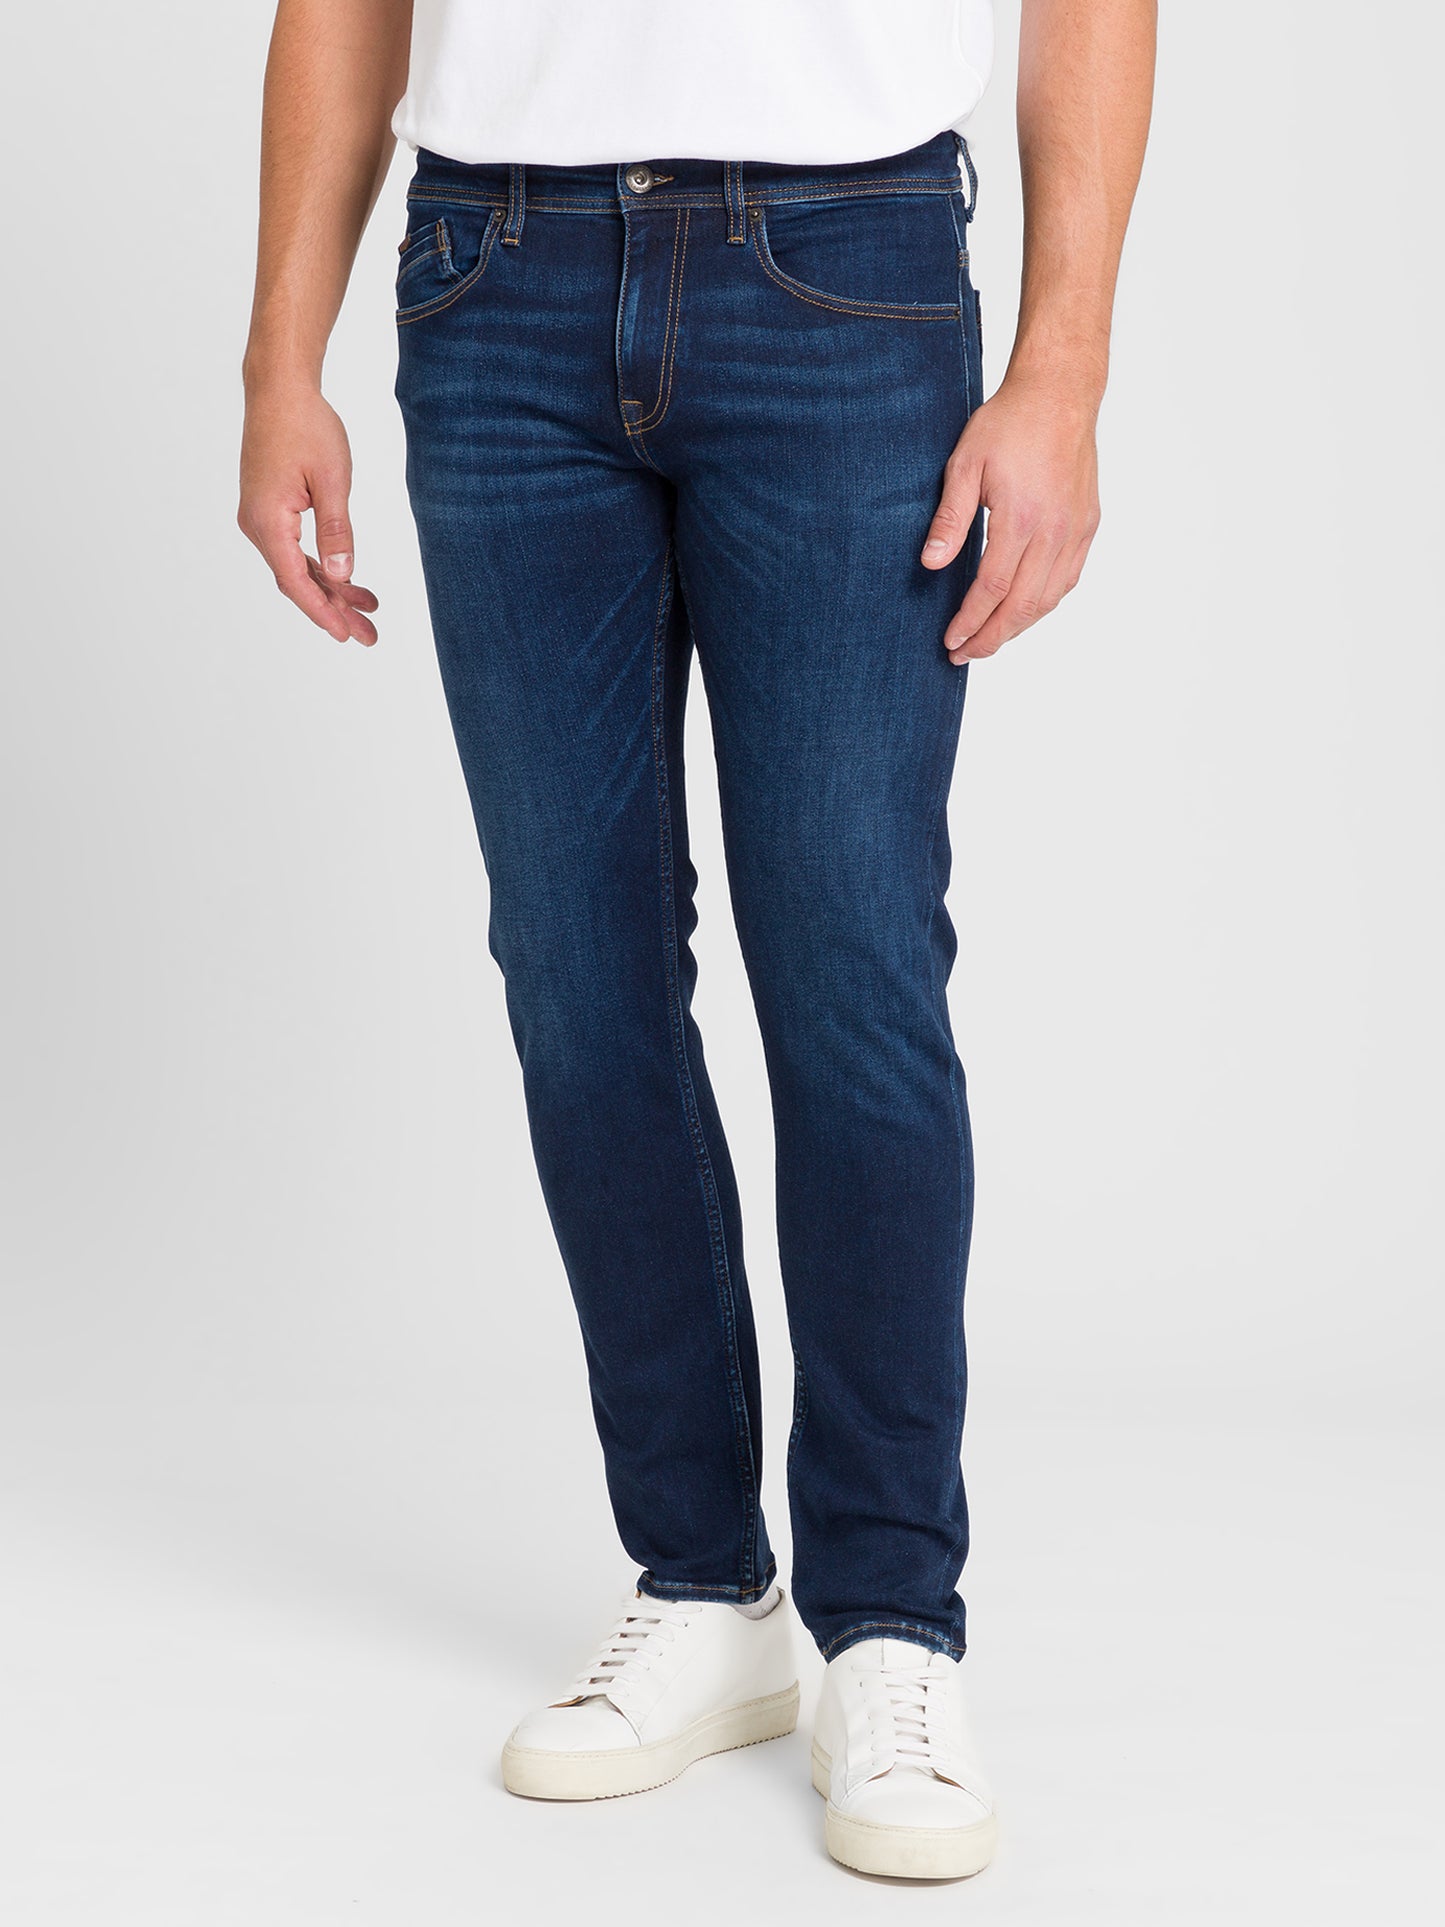 Jimi men's jeans slim fit regular waist tapered leg dark blue